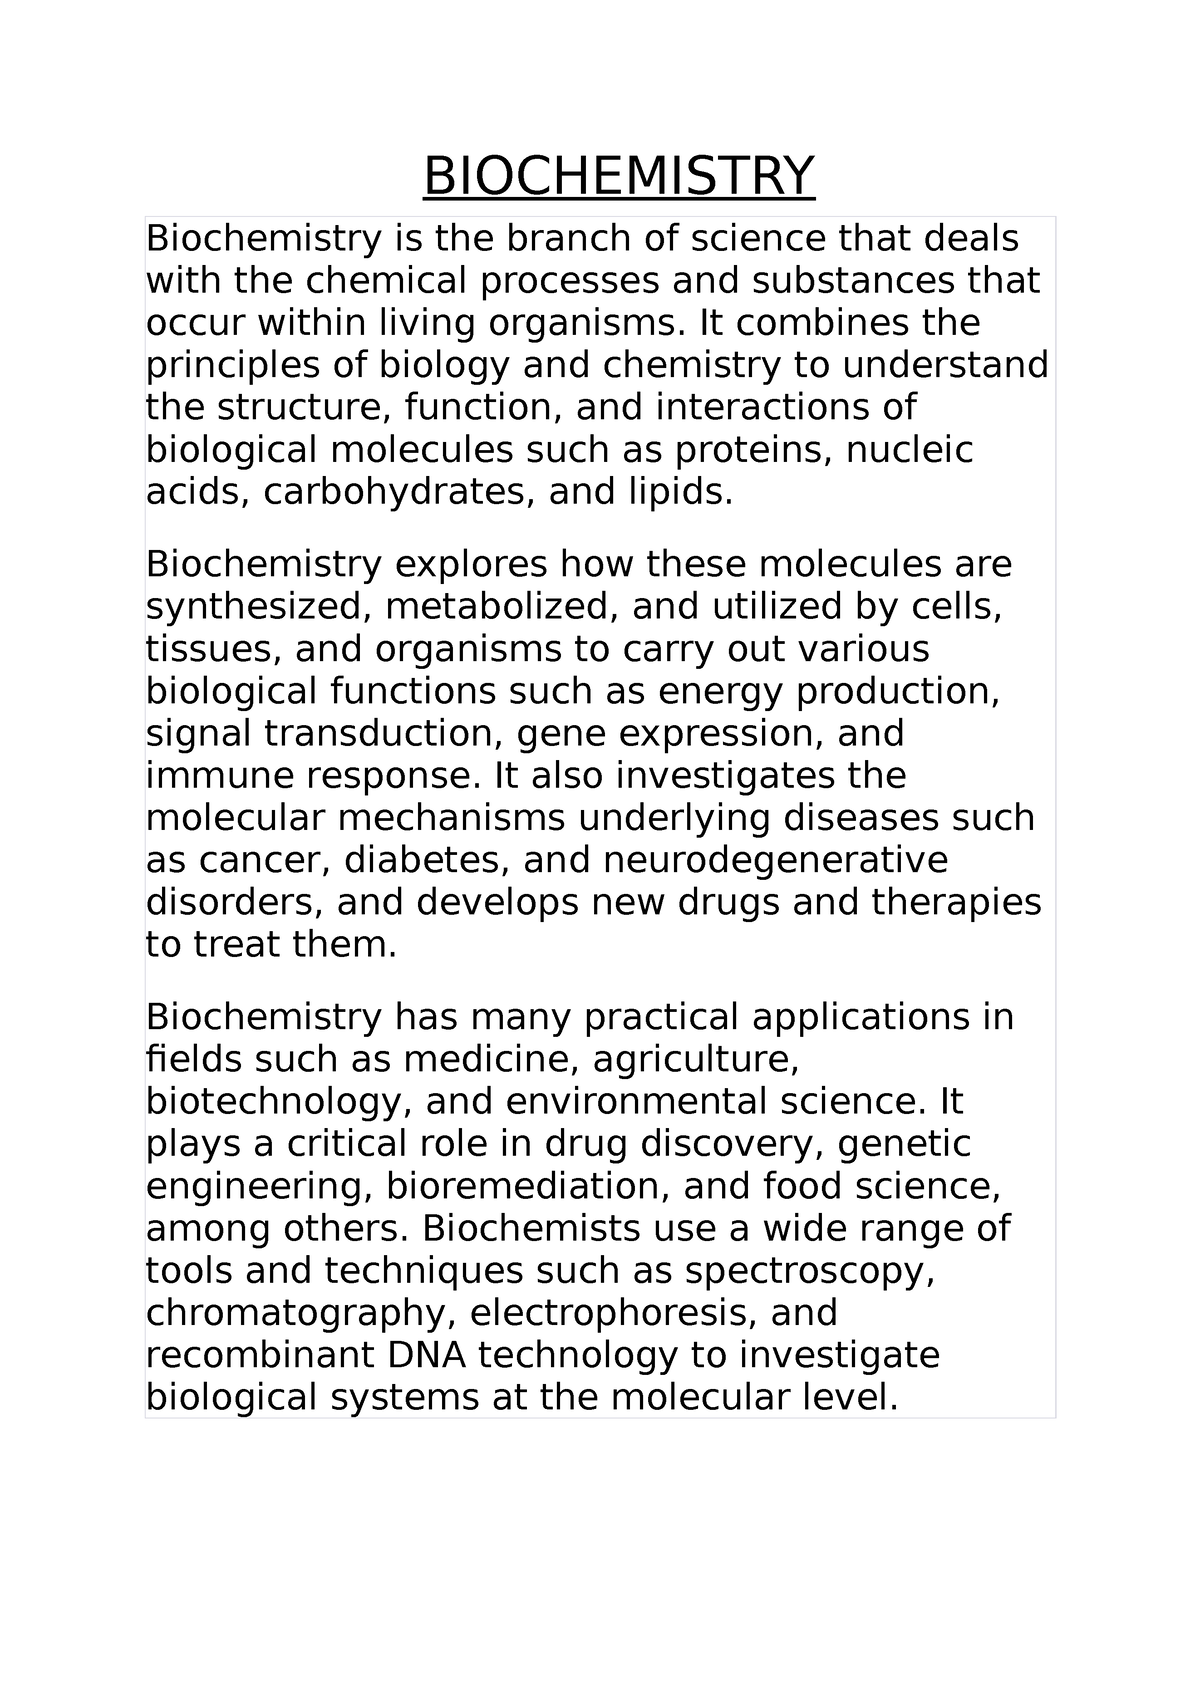 phd thesis biochemistry pdf